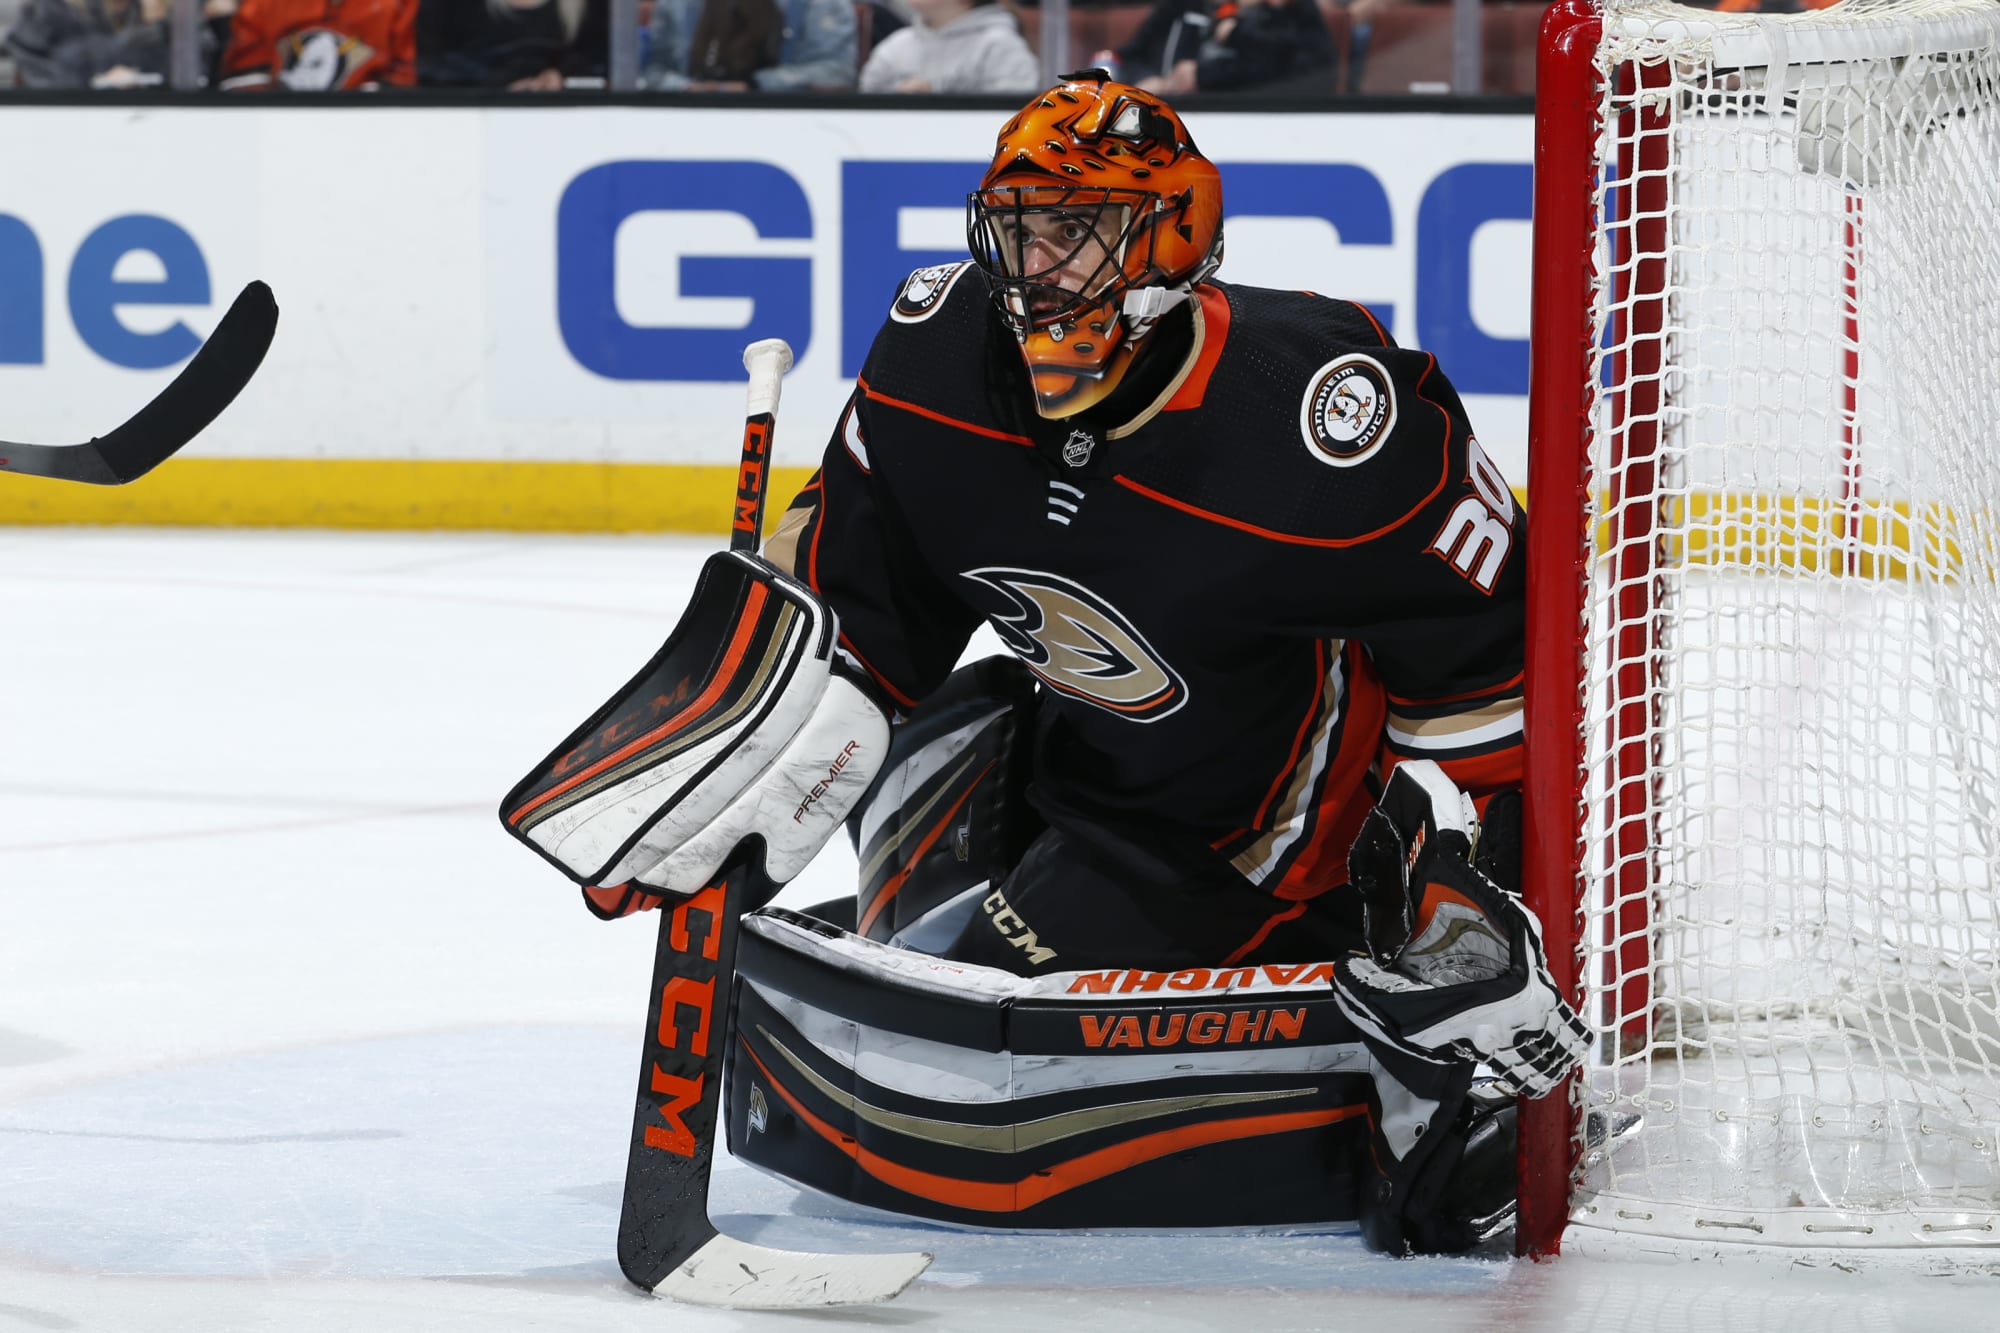 Anaheim Ducks Hockey 201: The Goalie's Butterfly Technique